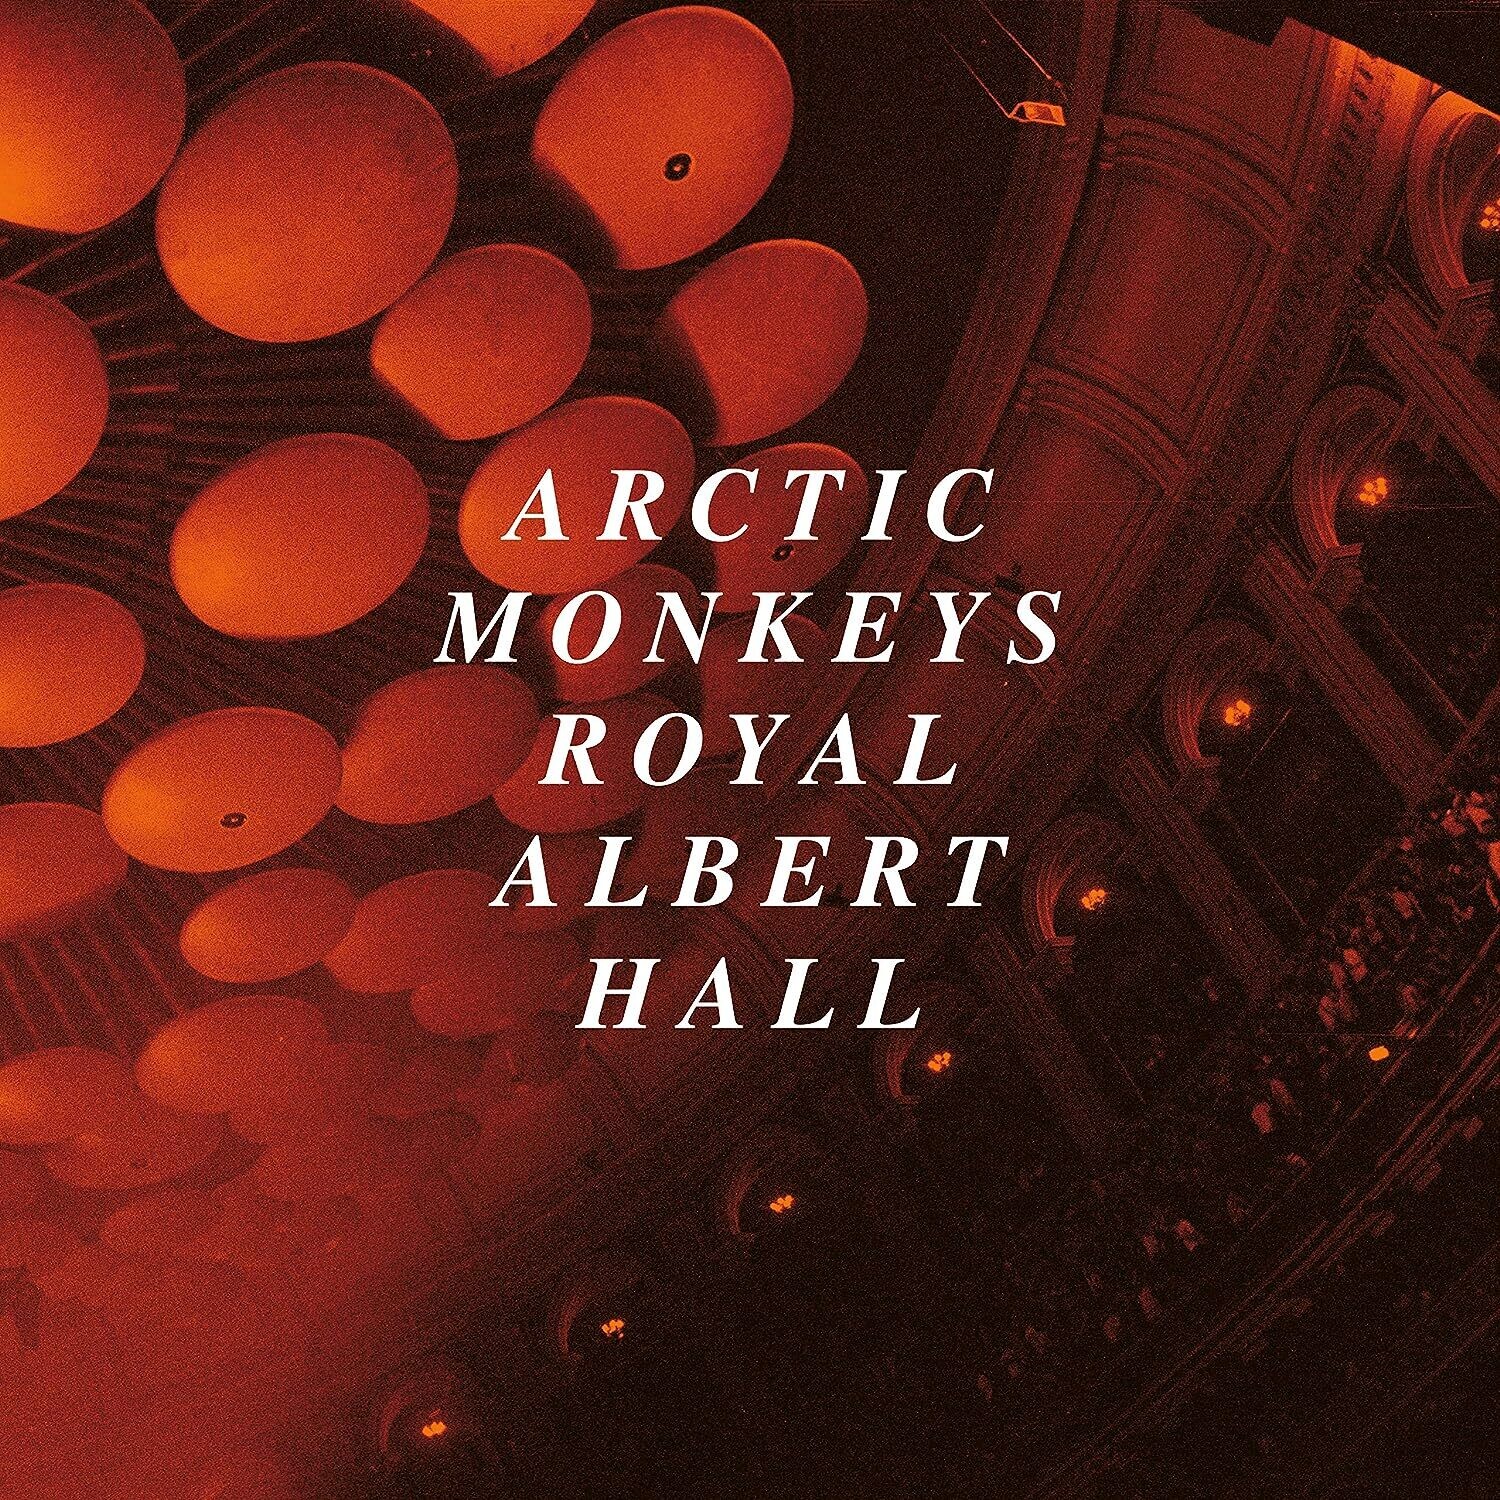 ARCTIC MONKEYS Royal Albert Hall 2LP 180gm NEW & SEALED